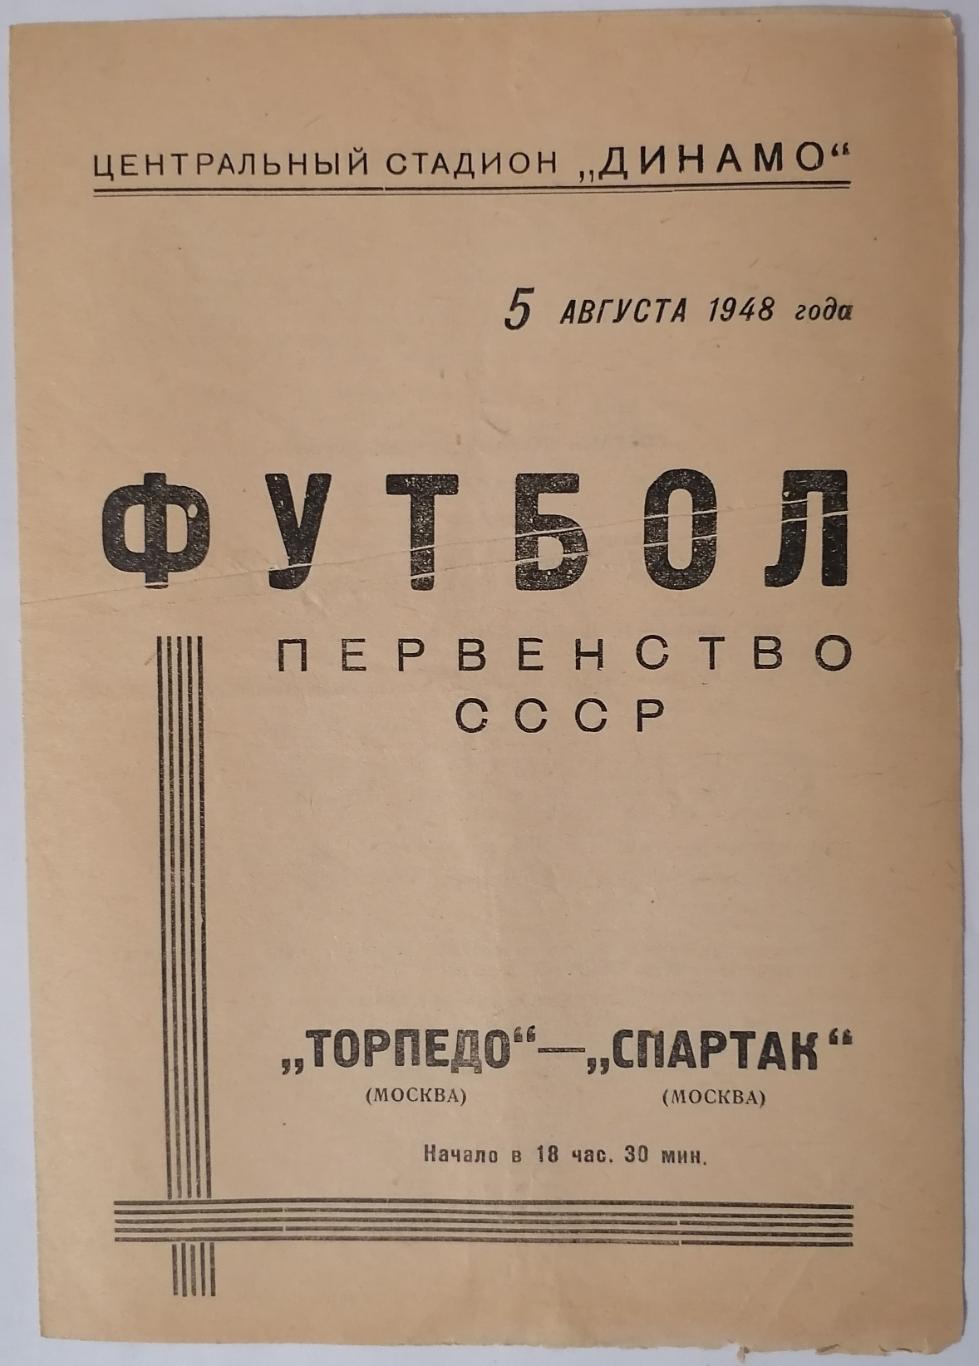 ТОРПЕДО МОСКВА - СПАРТАК МОСКВА - 1948 официальная программа